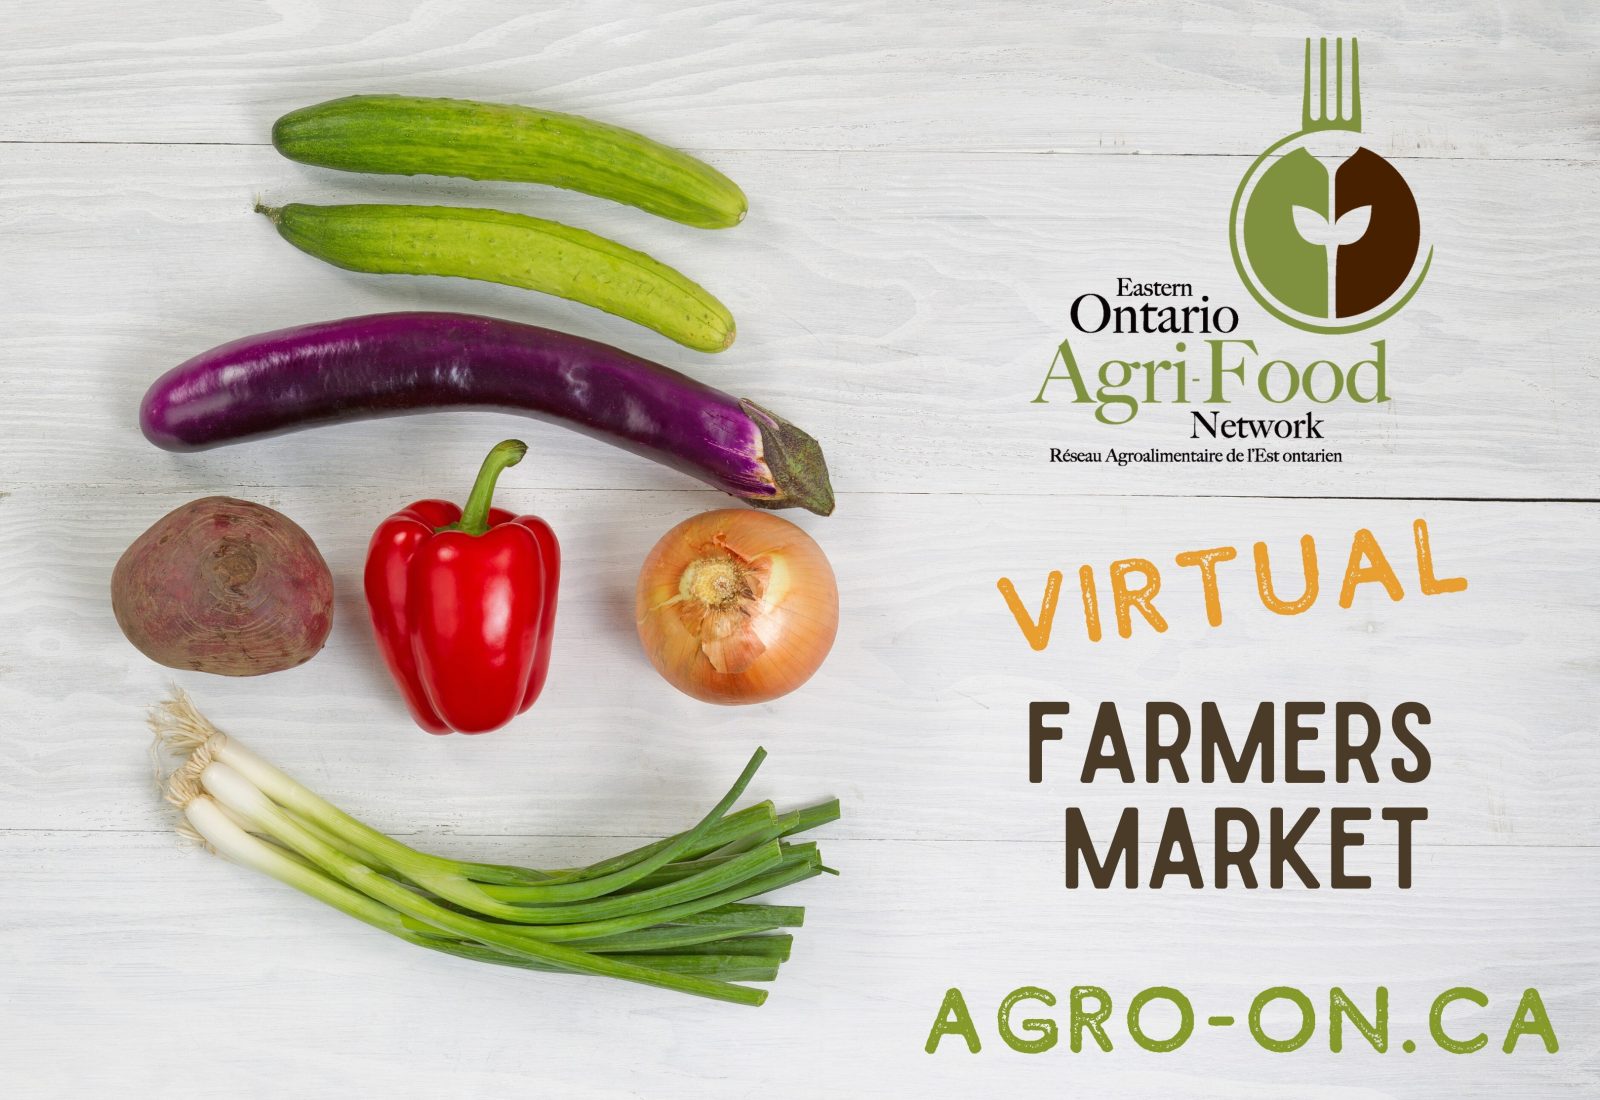 Virtual farmers market goes online for the region